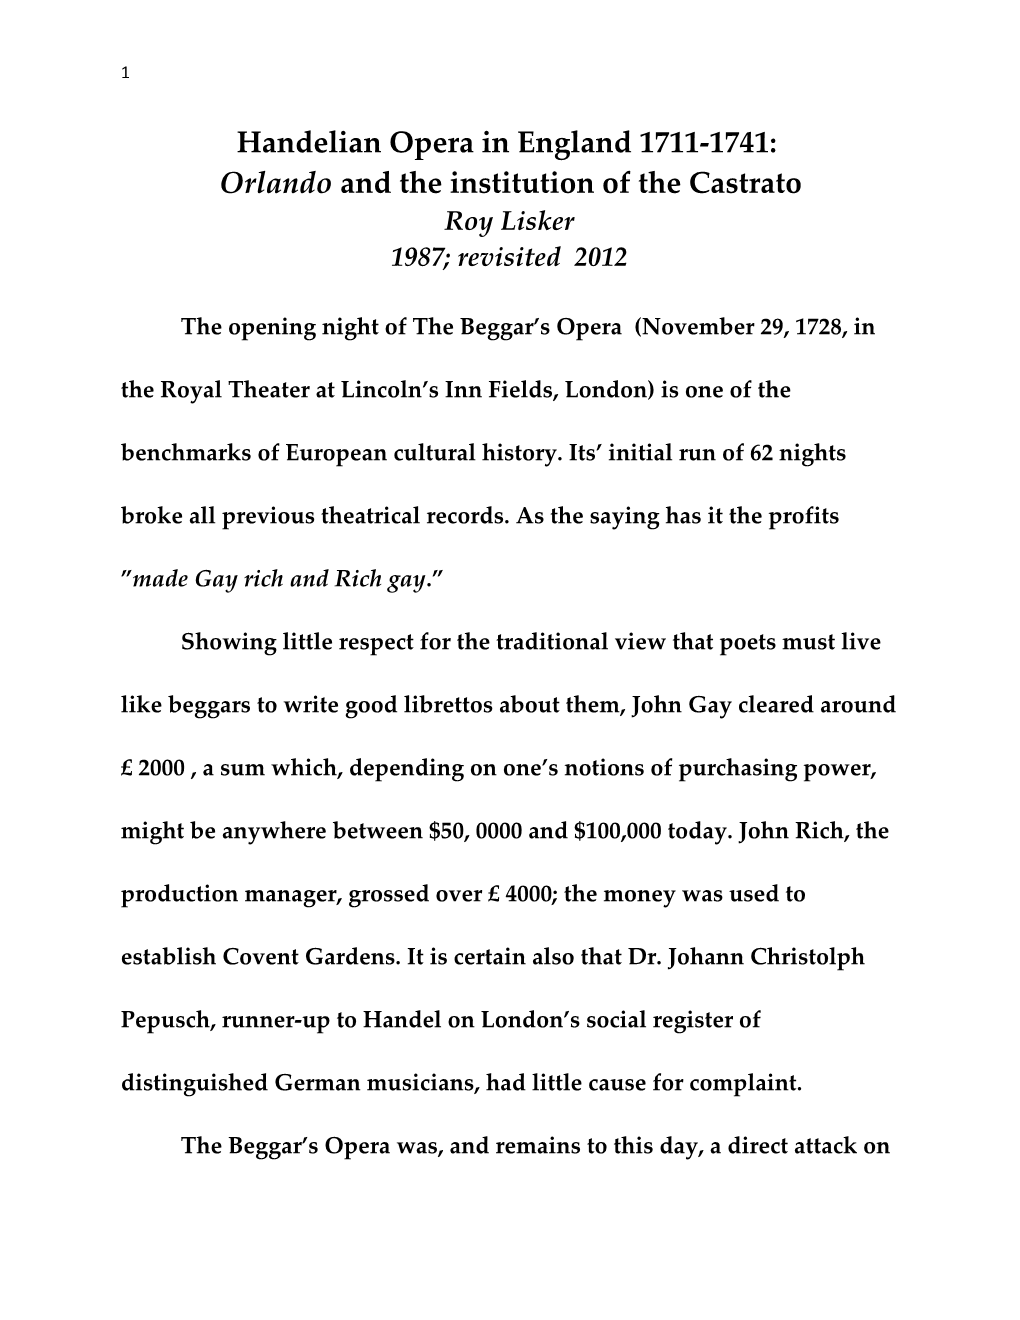 Orlandoand the Institution of the Castrato